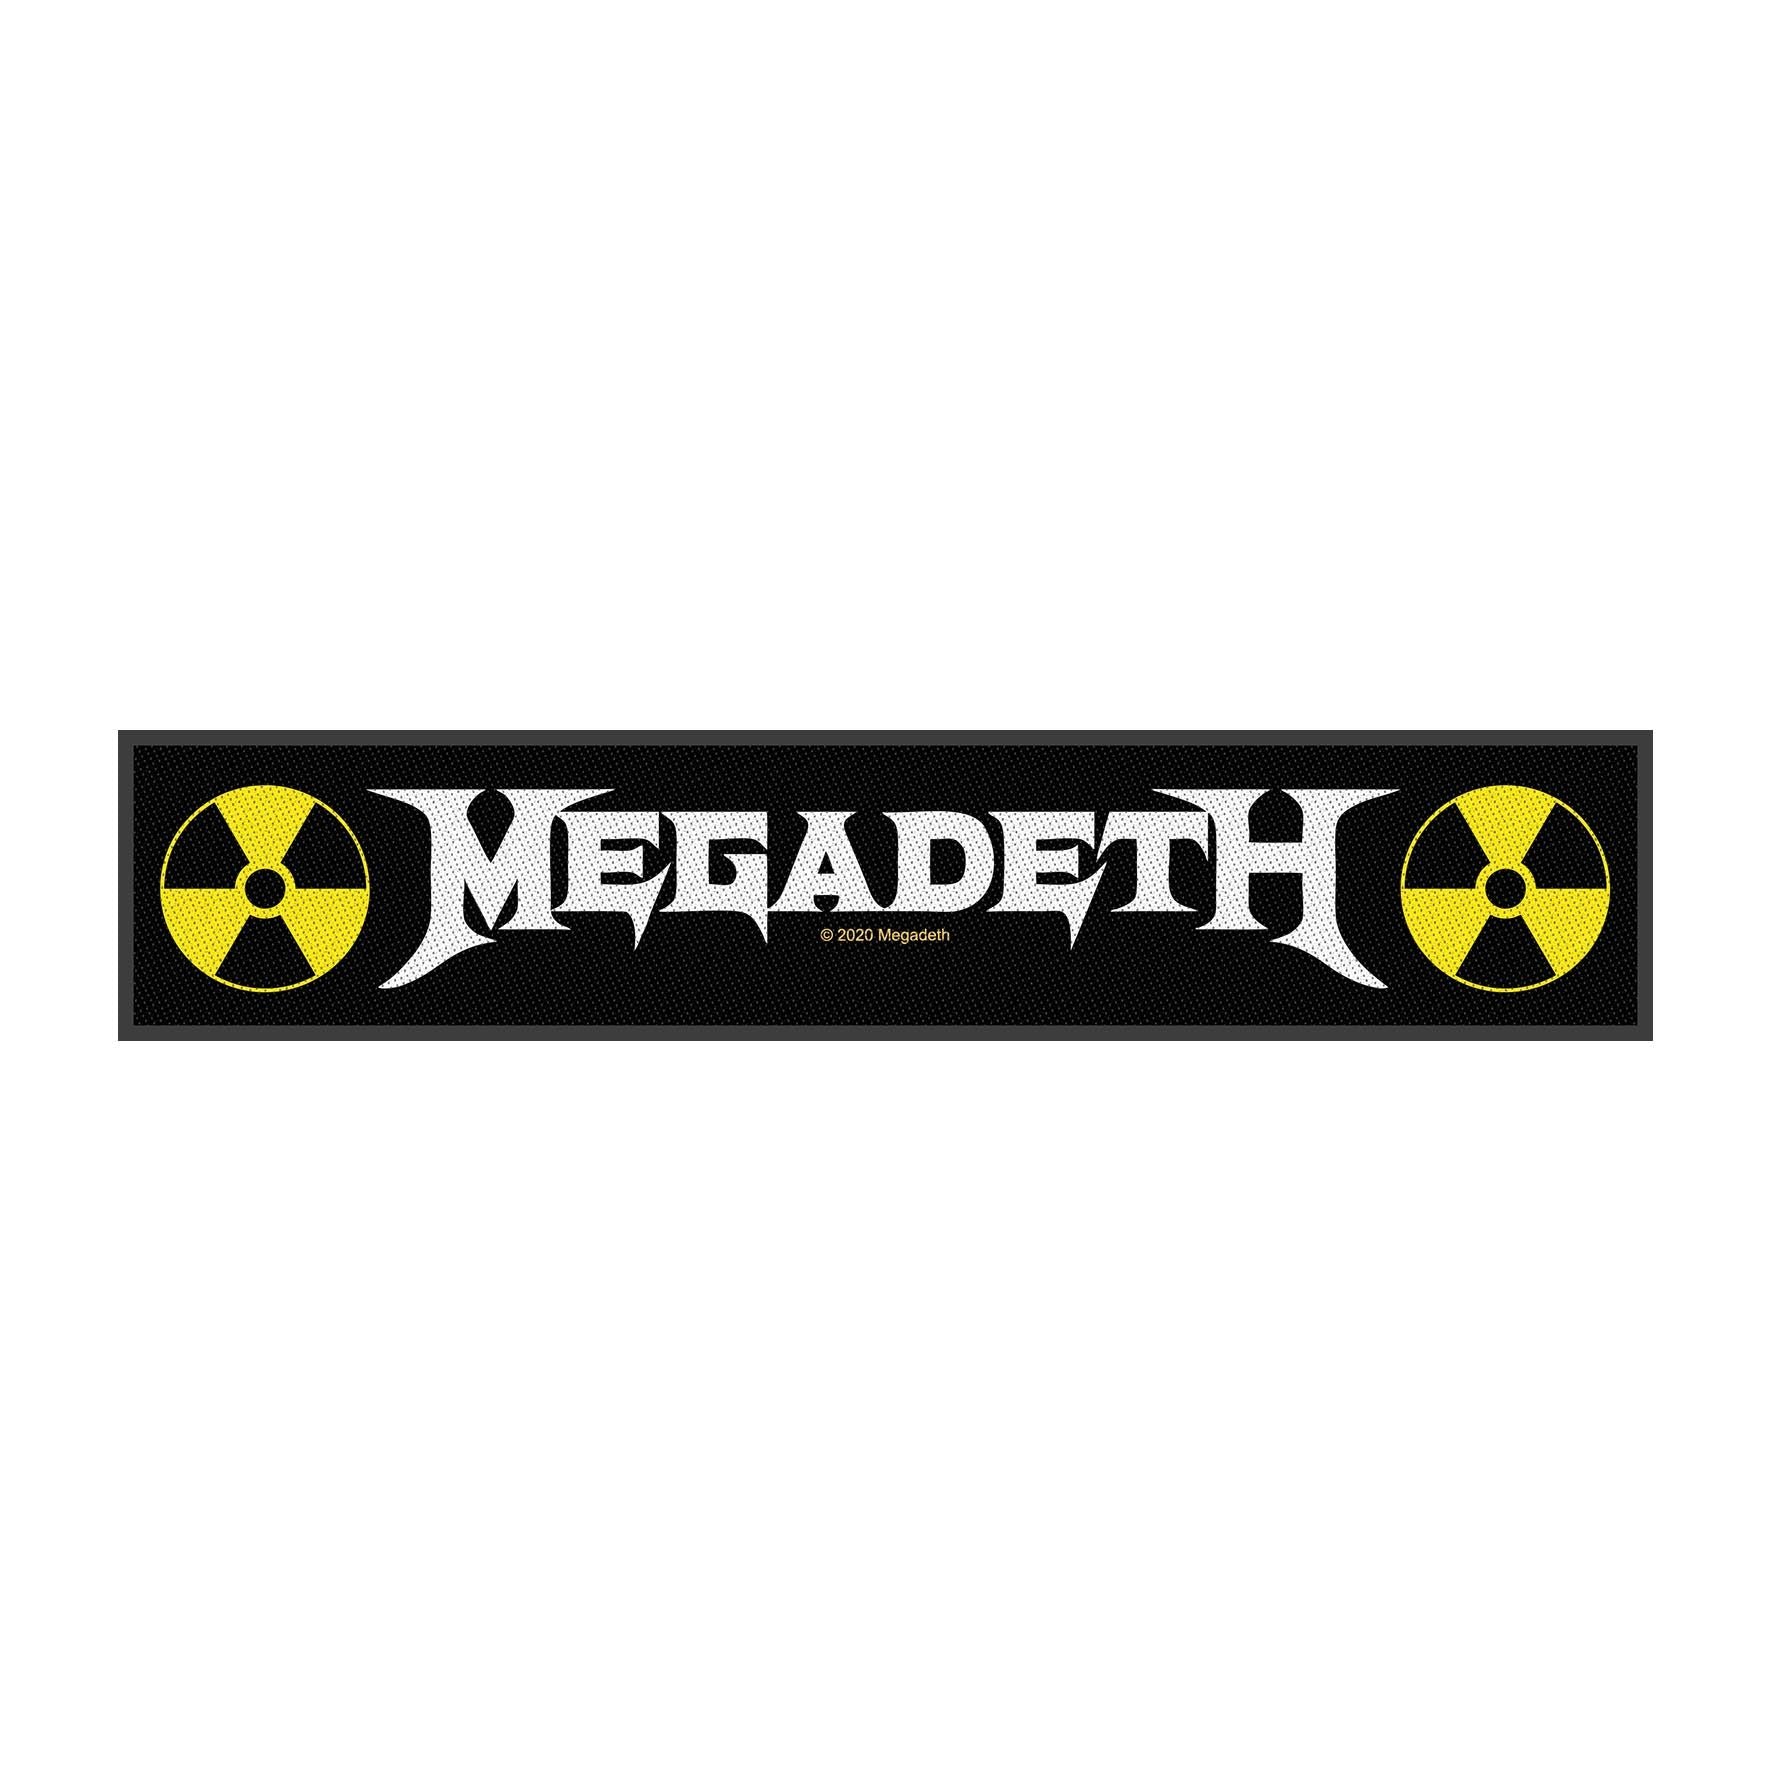 Megadeth - Logo Strip (190mm x 50mm) Sew-On Patch